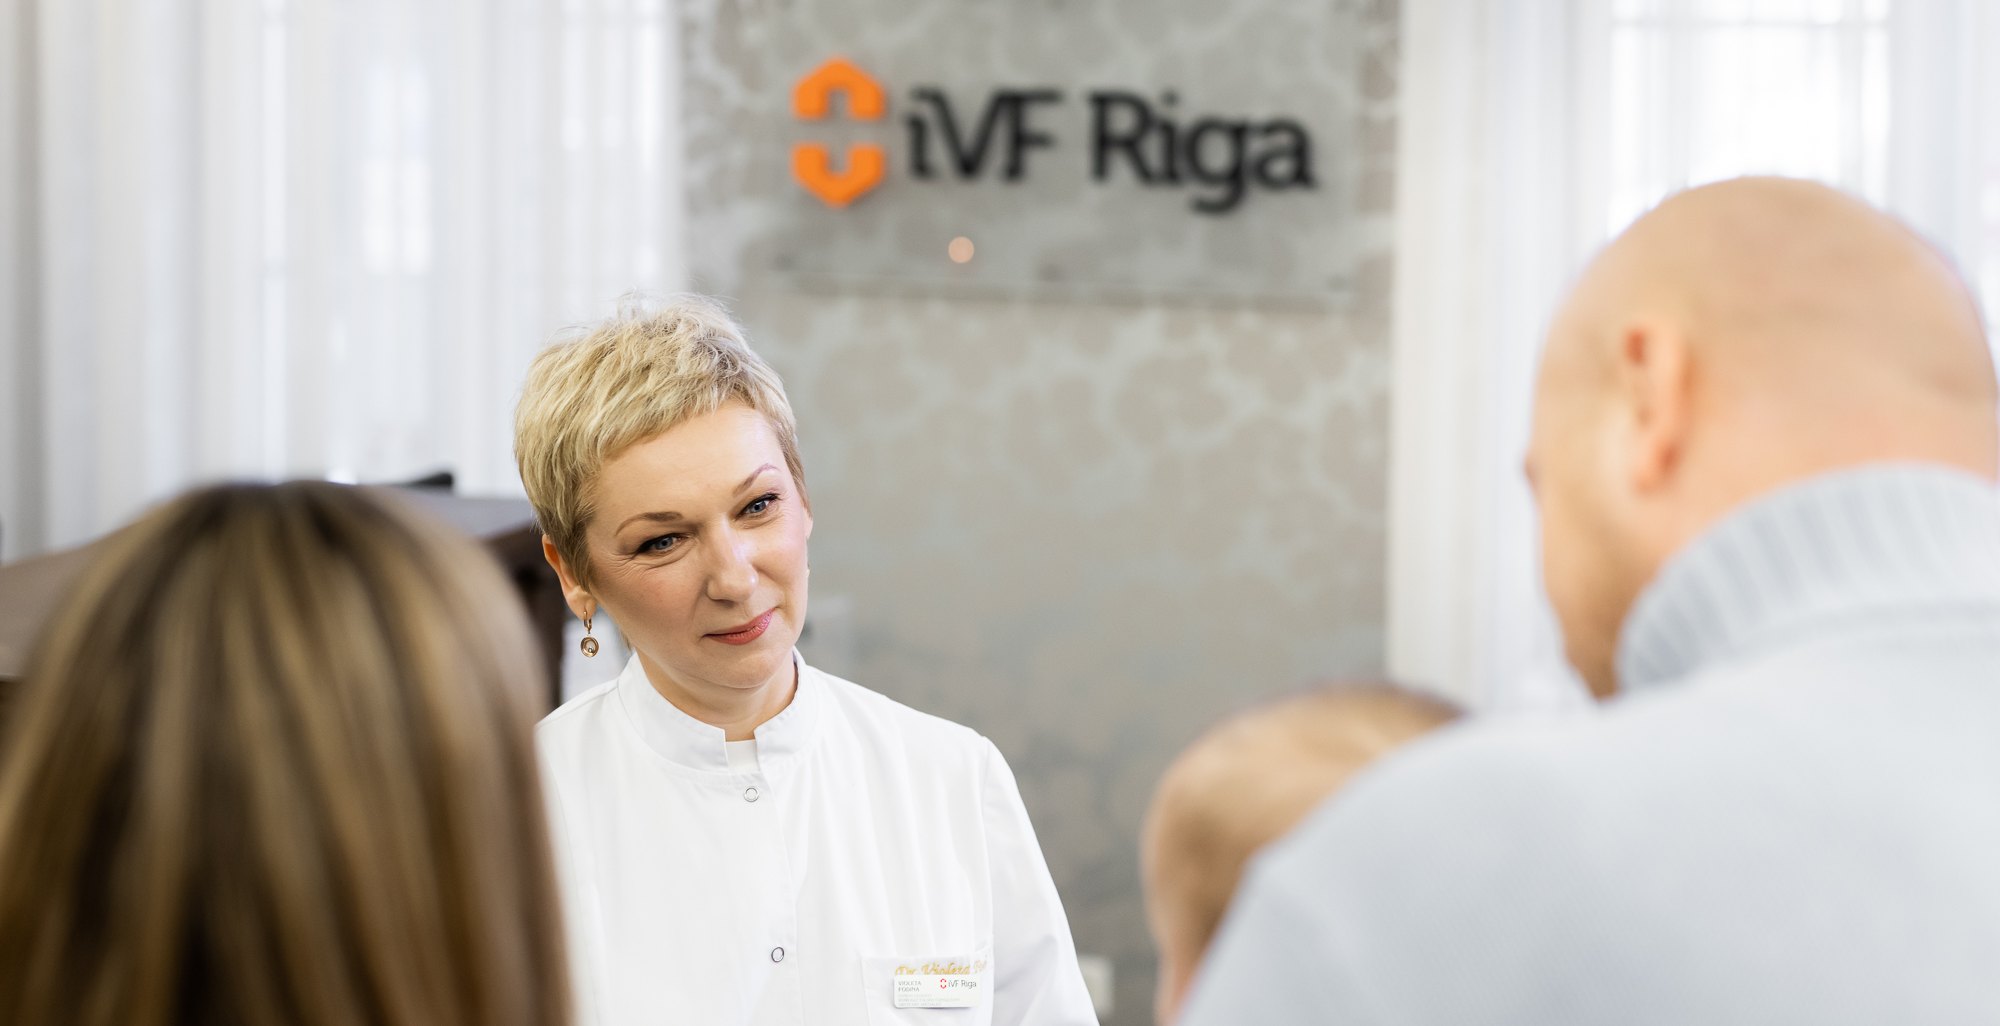 iVF Riga in Latvia